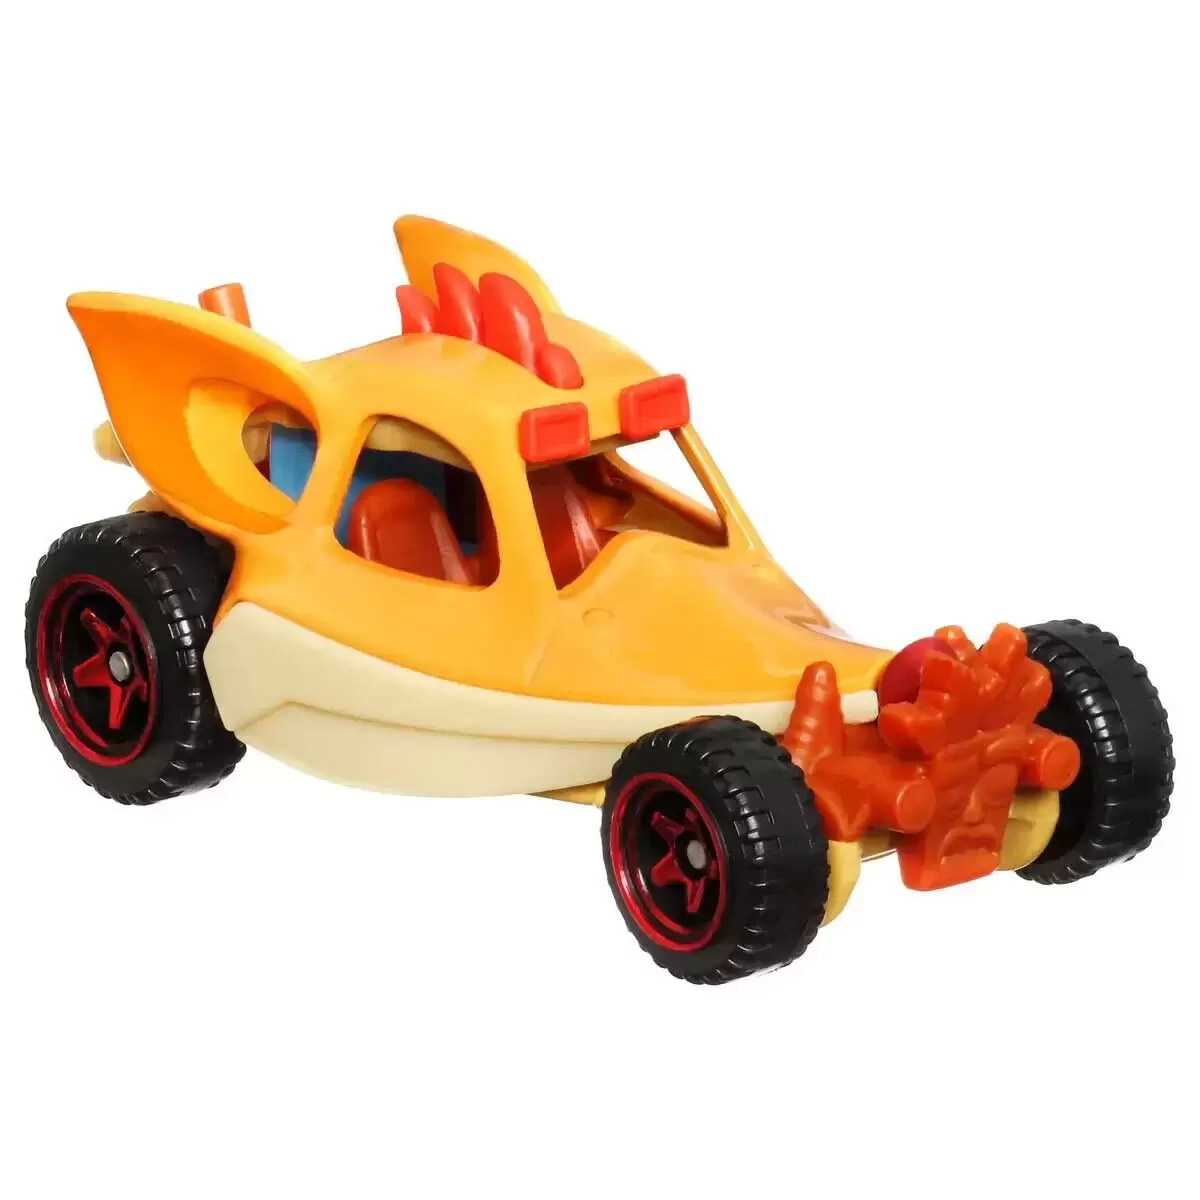 Hot Wheels Miscellaneous Character Cars - Crash Bandicoot